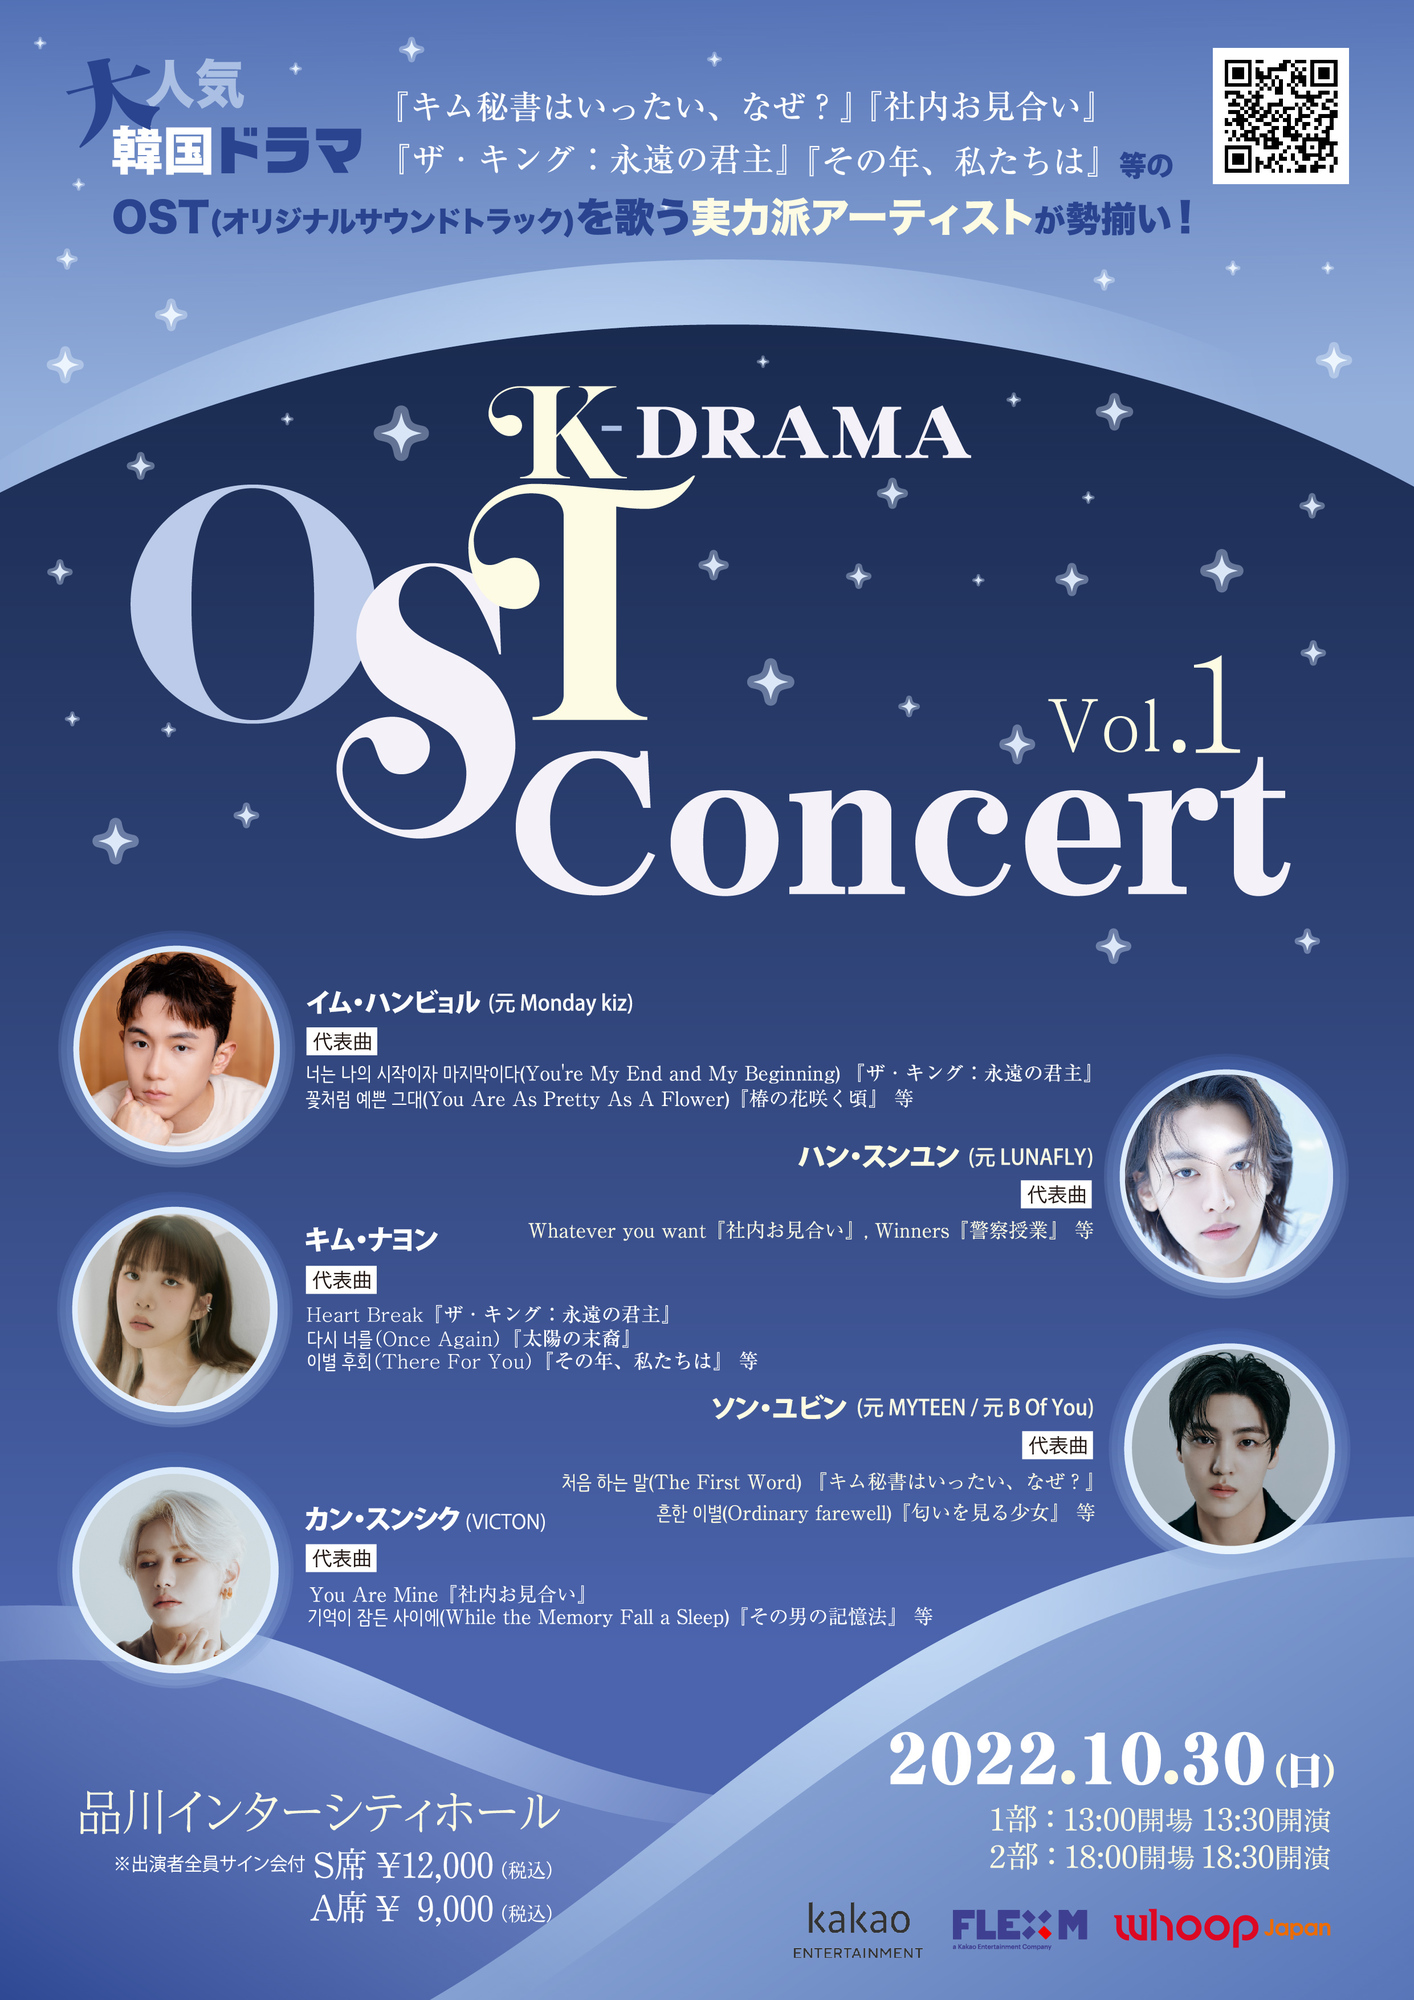 K-DRAMA OST Concert Vol.1 [2部]